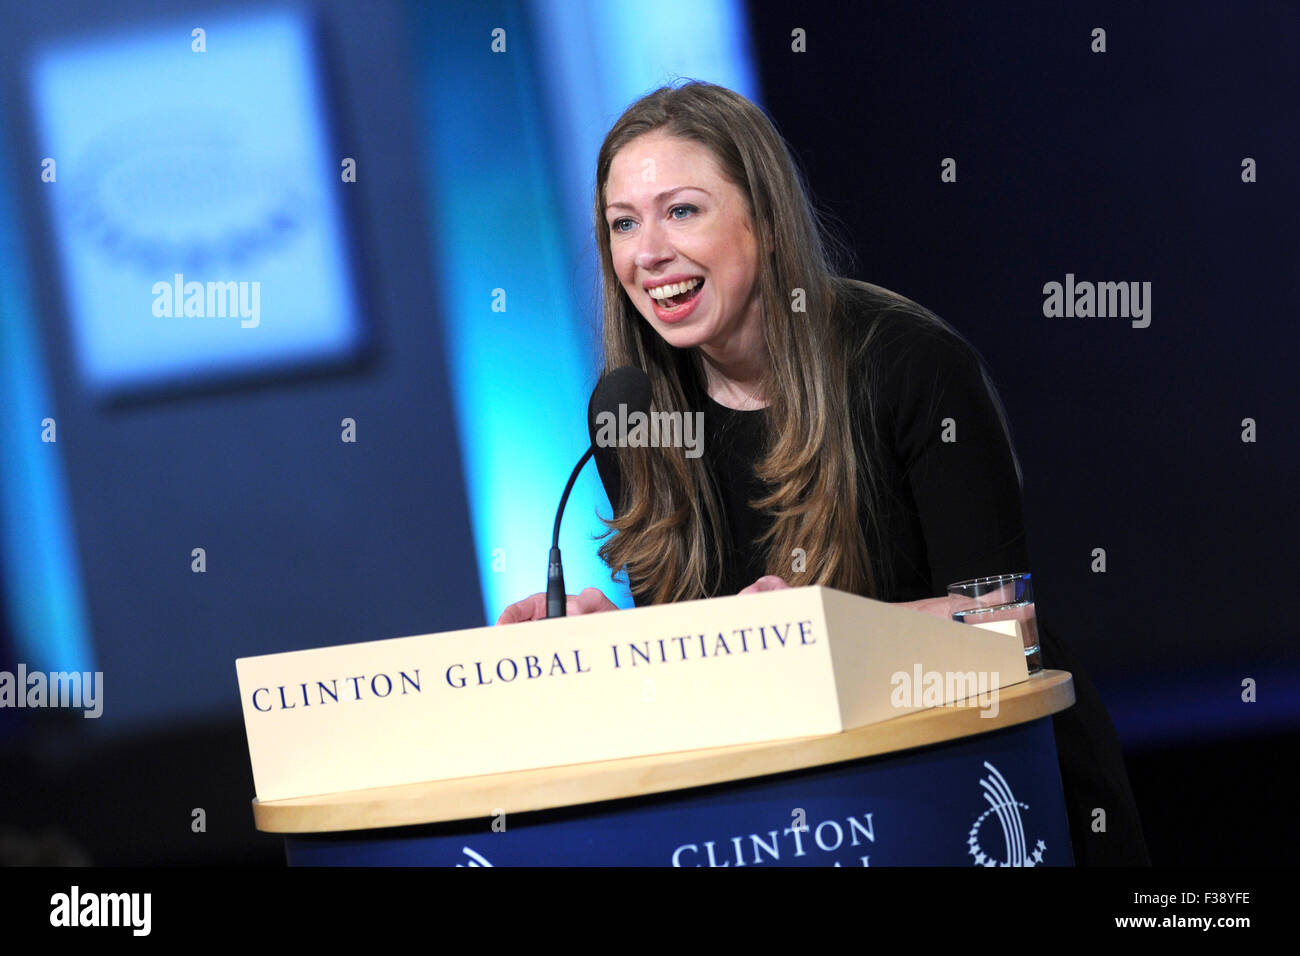 Chelsea Clinton bei der Abschlussfeier der Clinton Global Initiative 2015 im Hotel Sheraton Times Square in New York am 29. September. Stockfoto